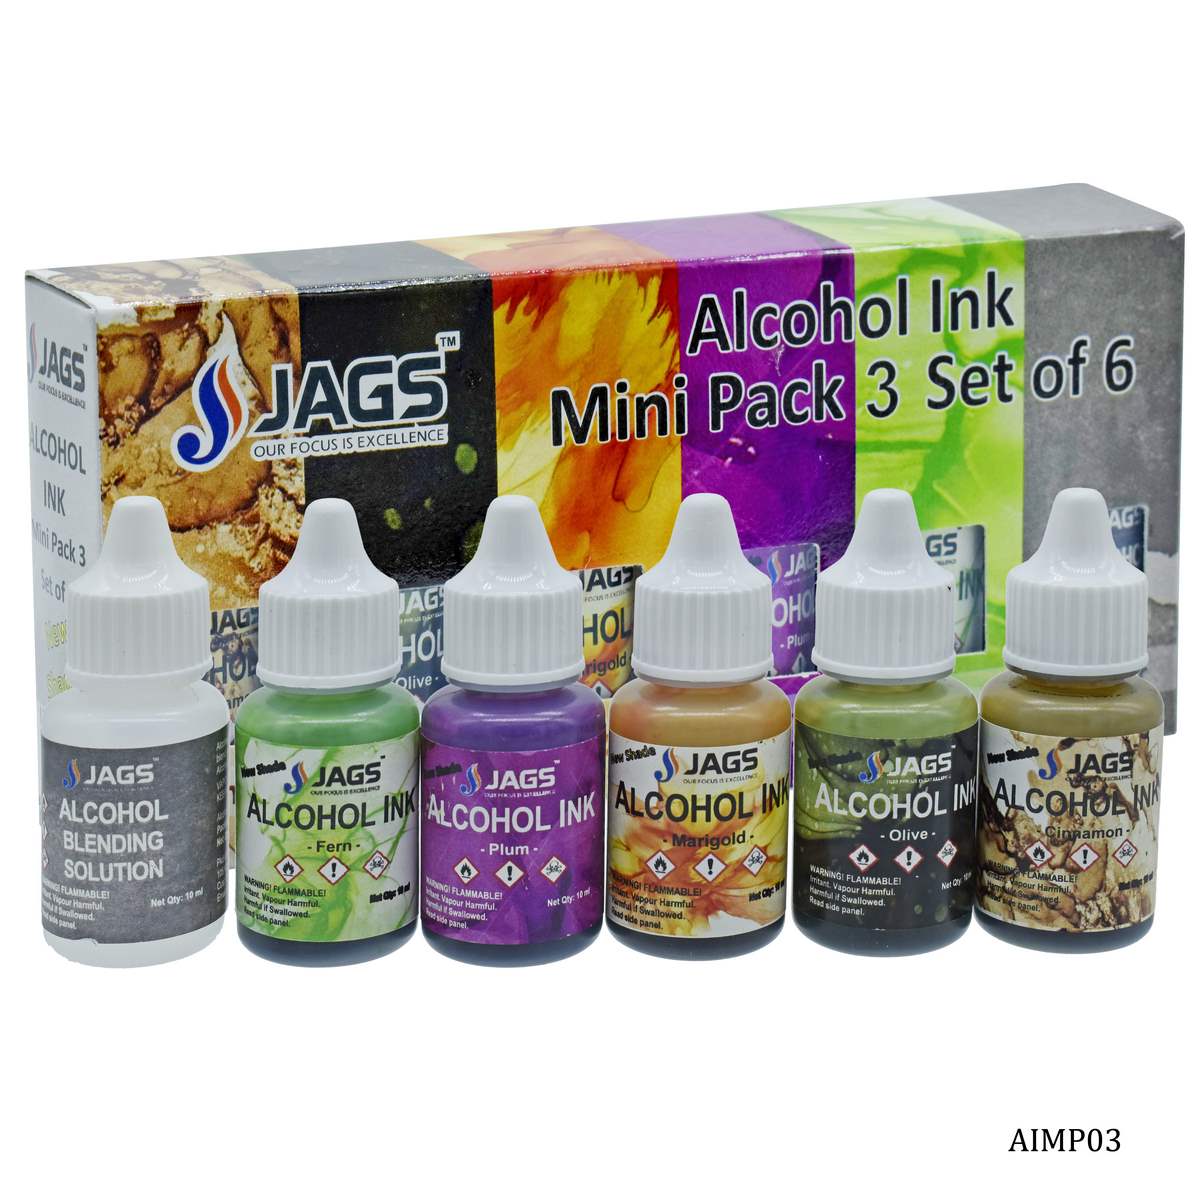 jags-mumbai Alcohol Inks Alcohol Ink Mini Pack 3 - Set of 6 AIMP03